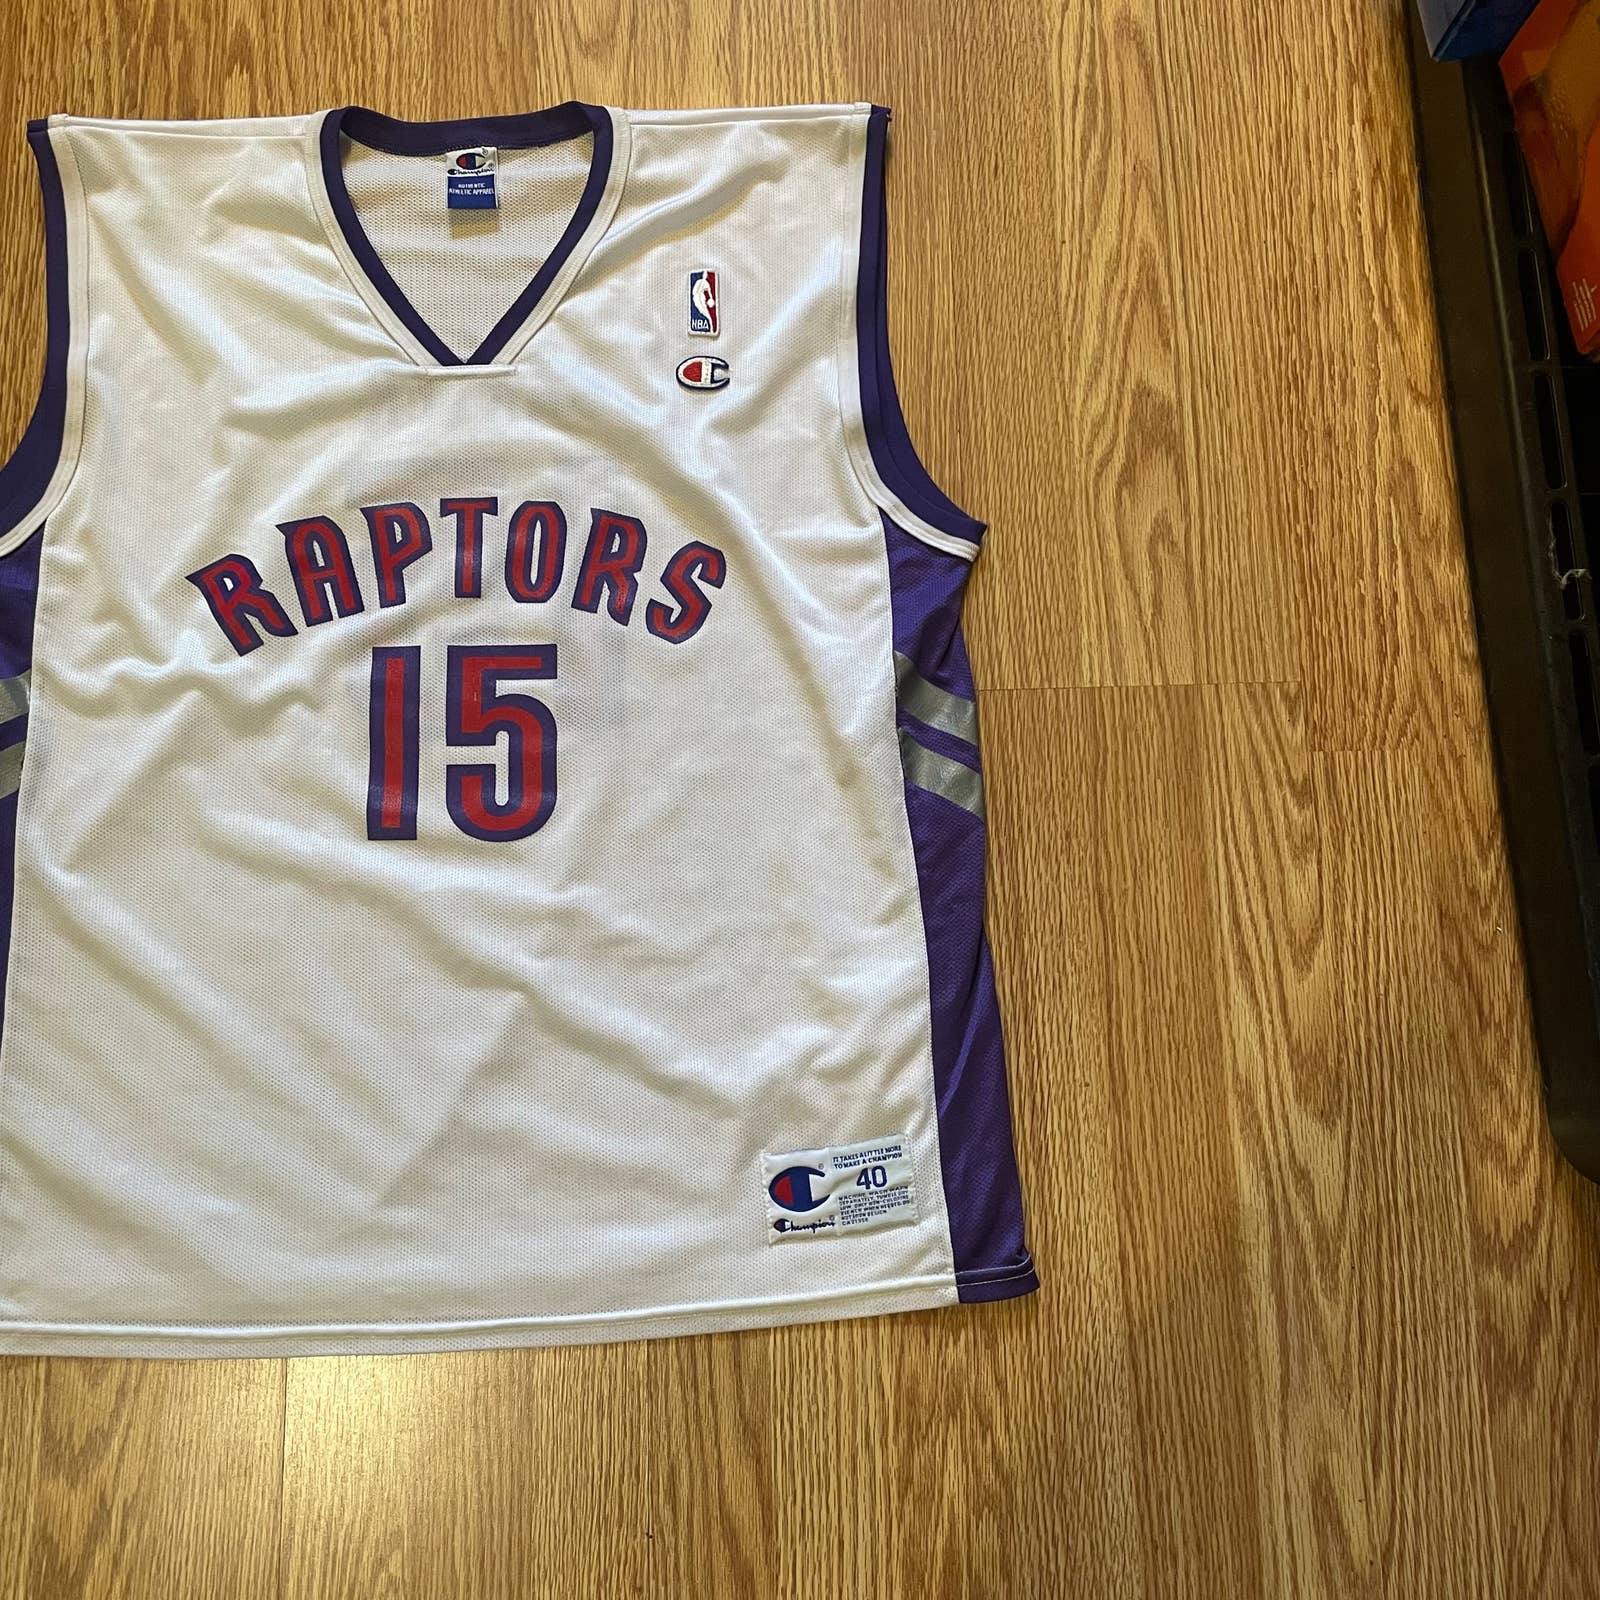 DregsThreads Toronto Raptors Champion Vince Carter Jersey | Basketball Shirt NBA Sportswear